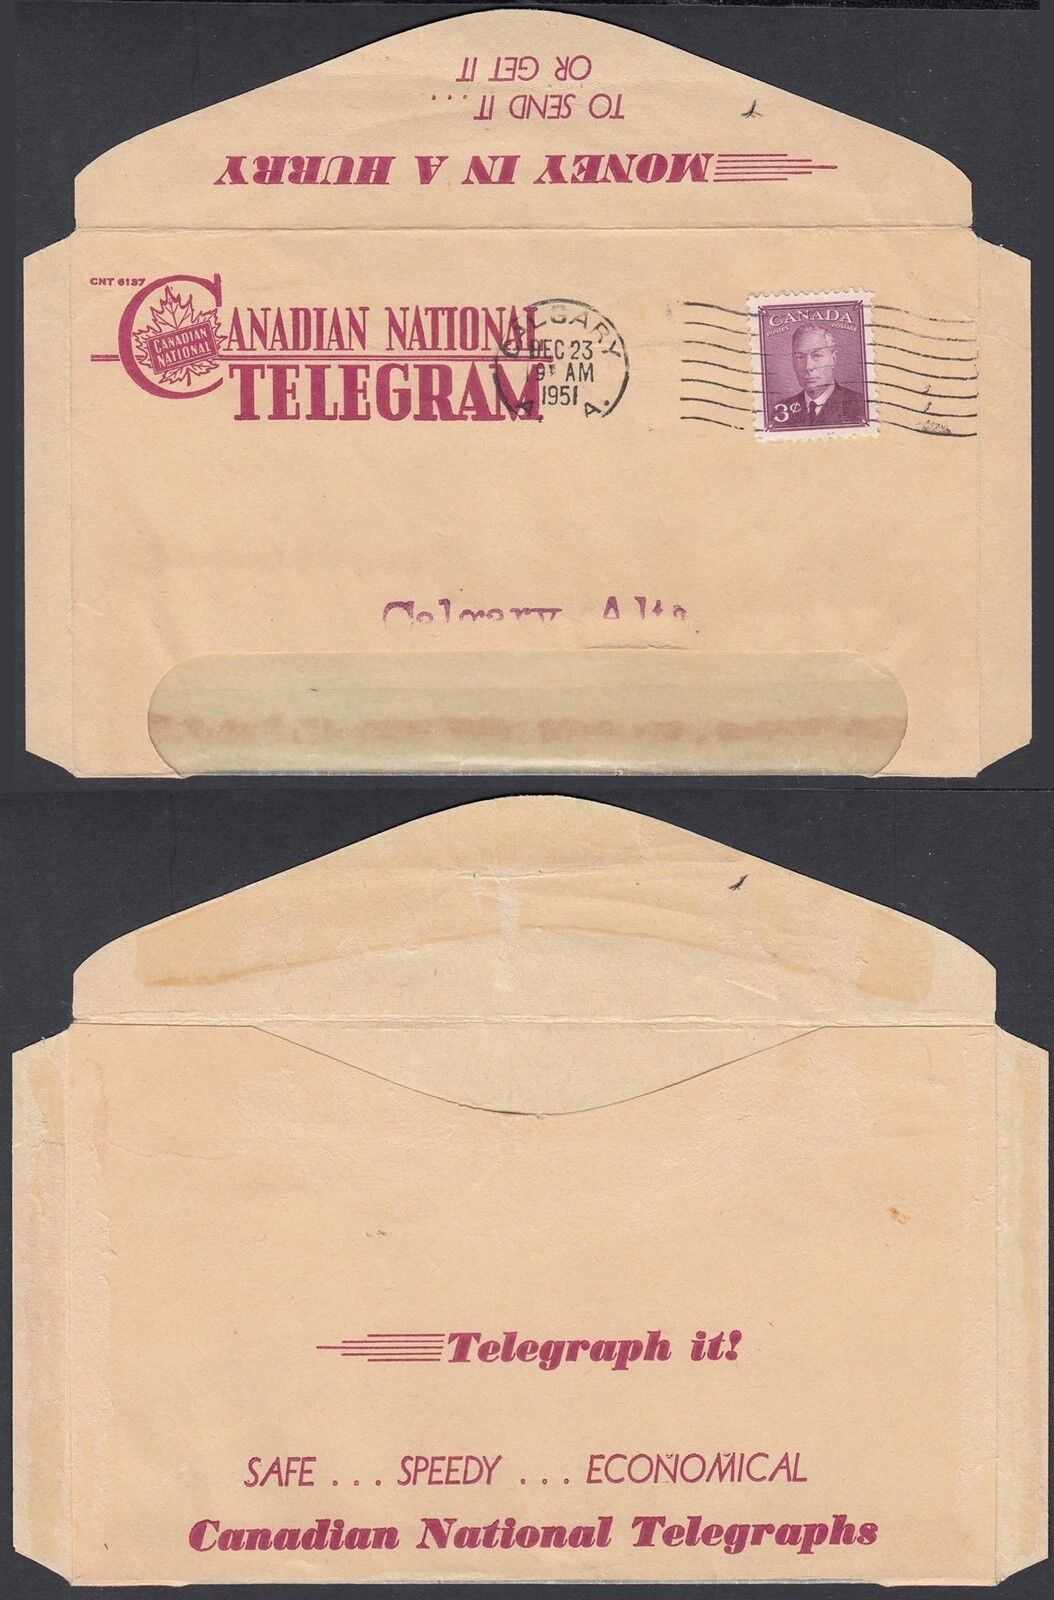 1951 envelope